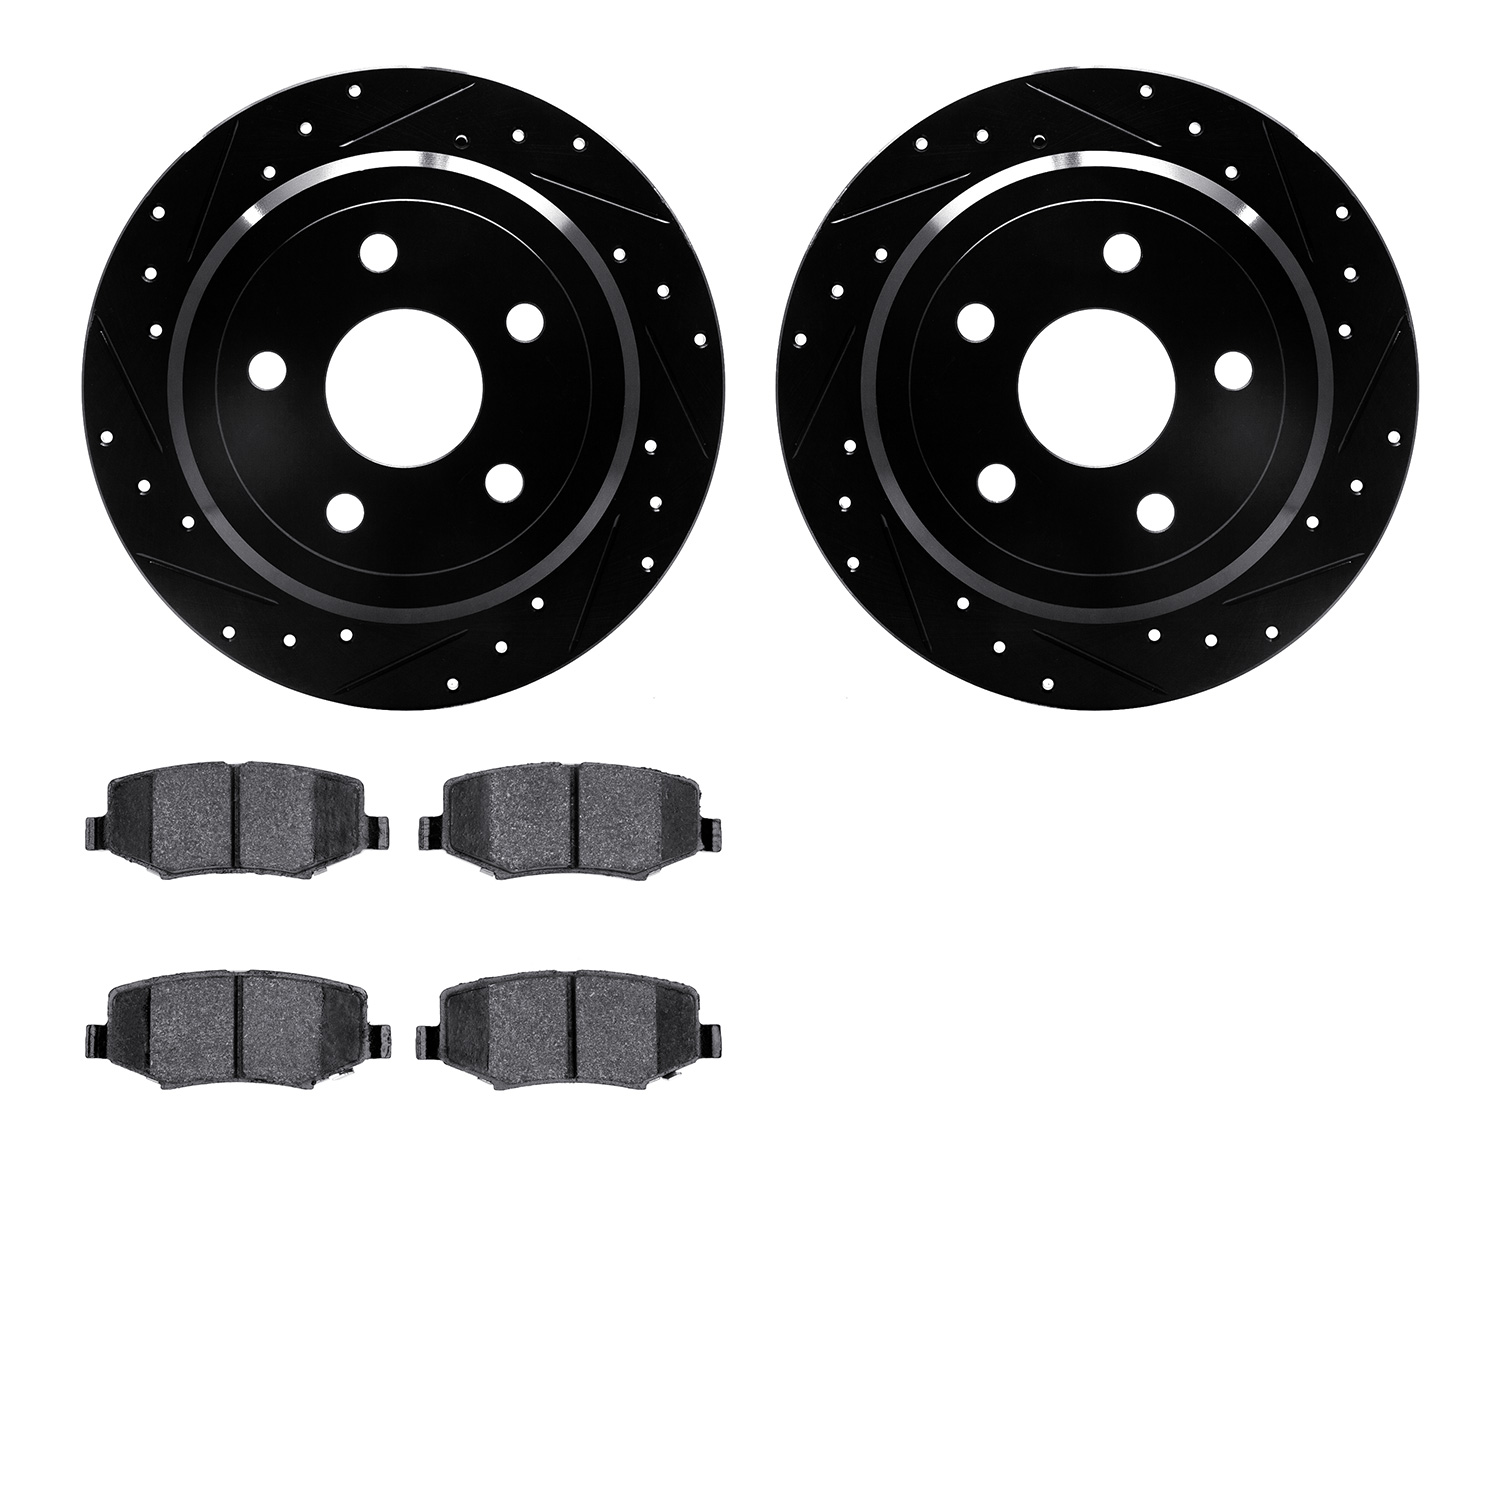 8402-42035 Drilled/Slotted Brake Rotors with Ultimate-Duty Brake Pads Kit [Black], 2007-2018 Mopar, Position: Rear